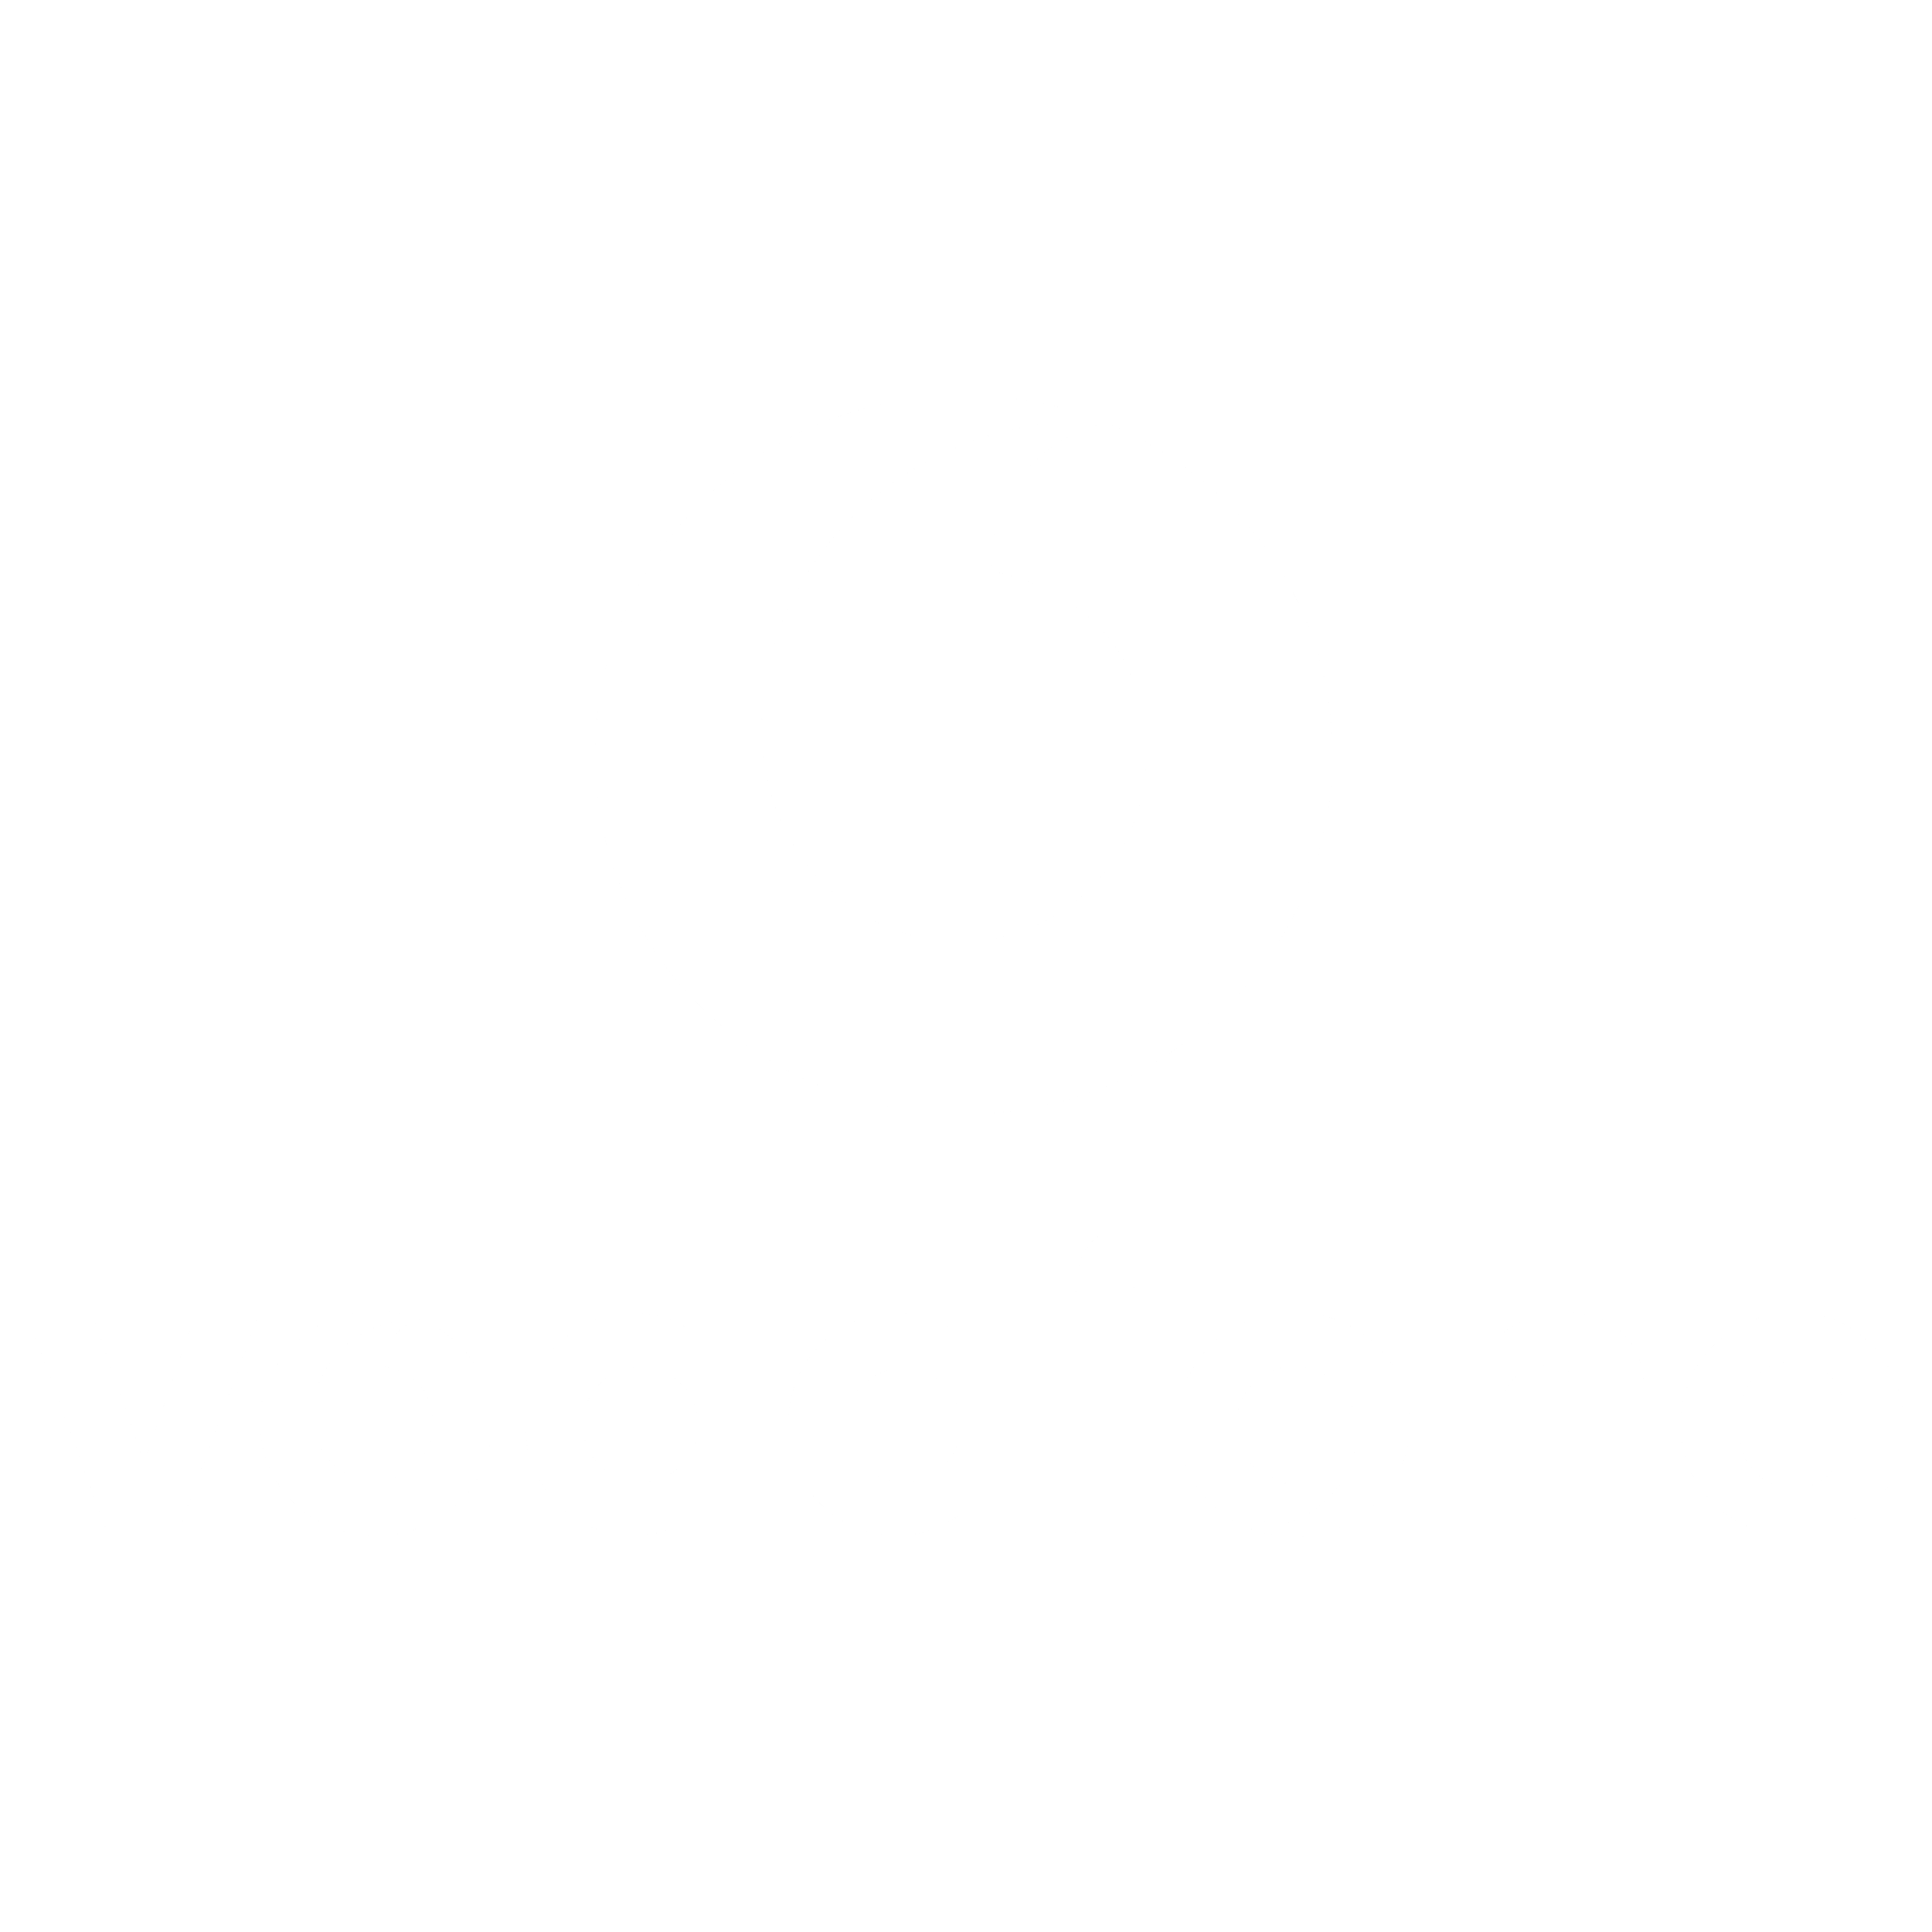 Vodafone Logo PNG - 179397